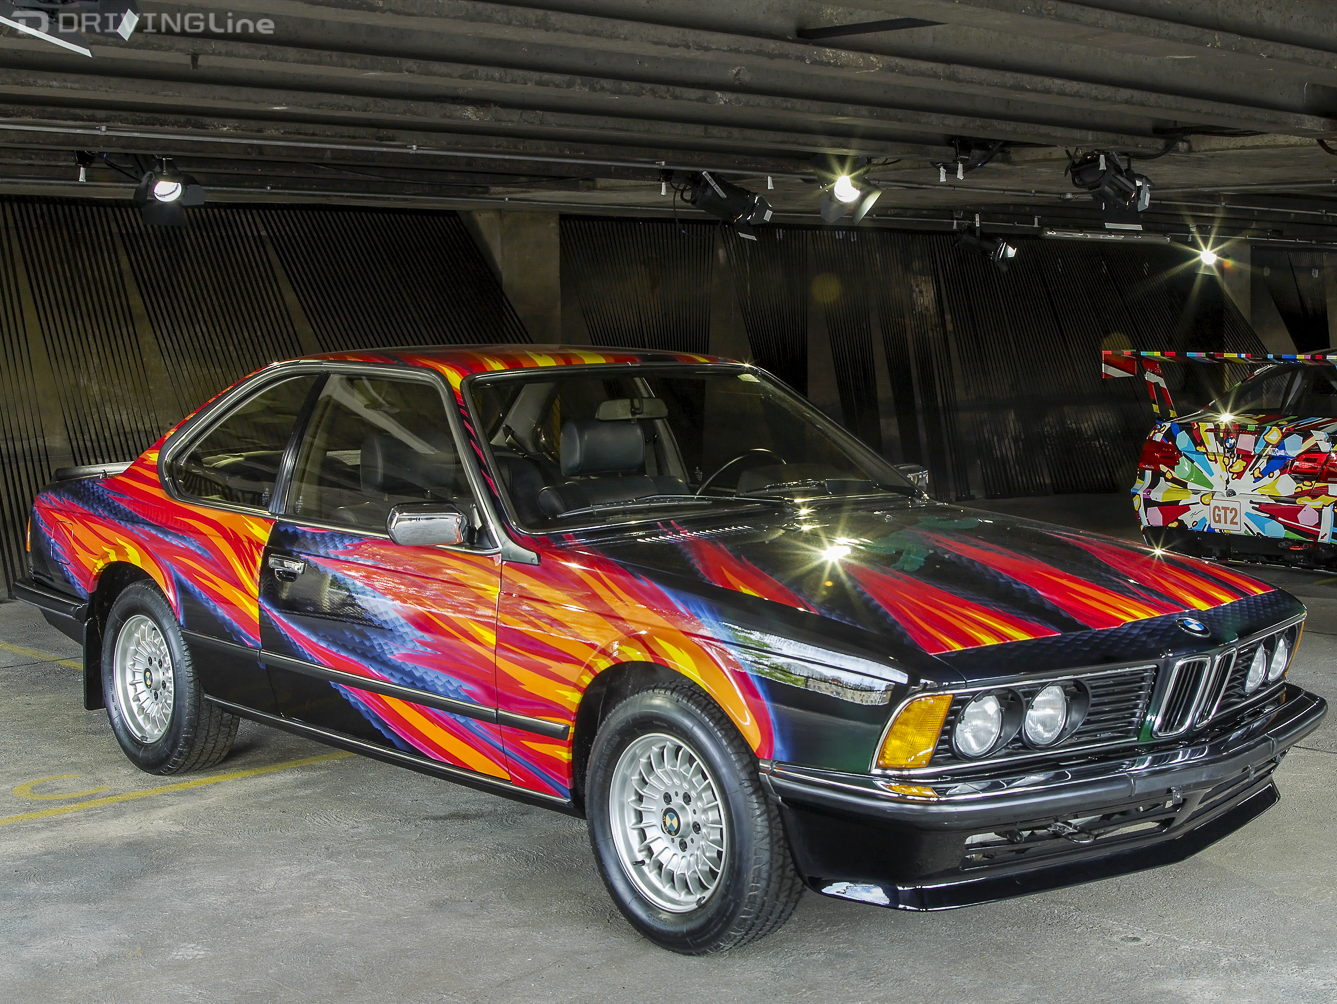 The BMW Art Car Gallery: Second Floor | DrivingLine